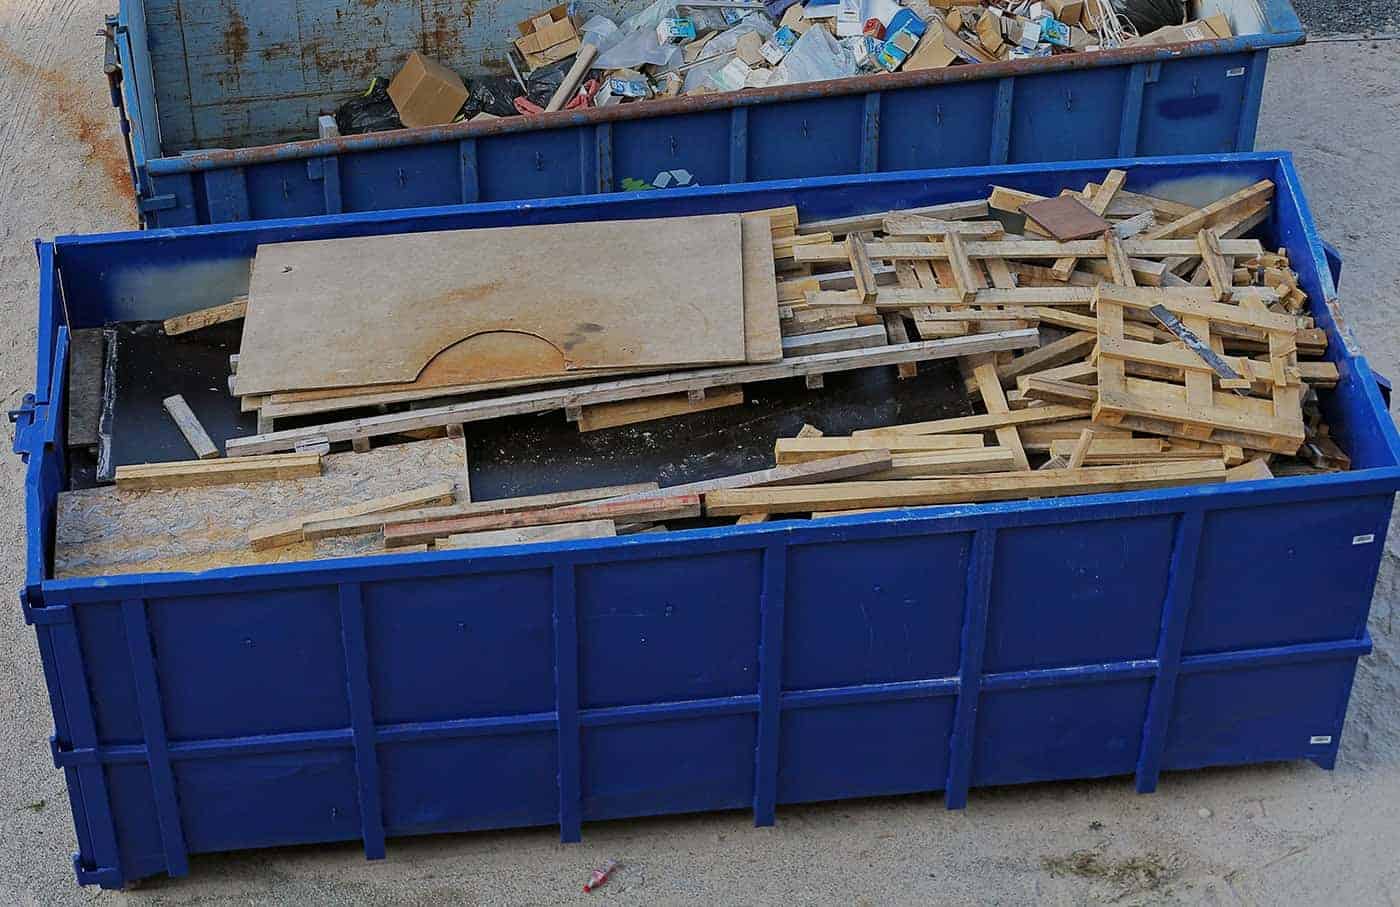 a full dumpster rental waiting for pickup